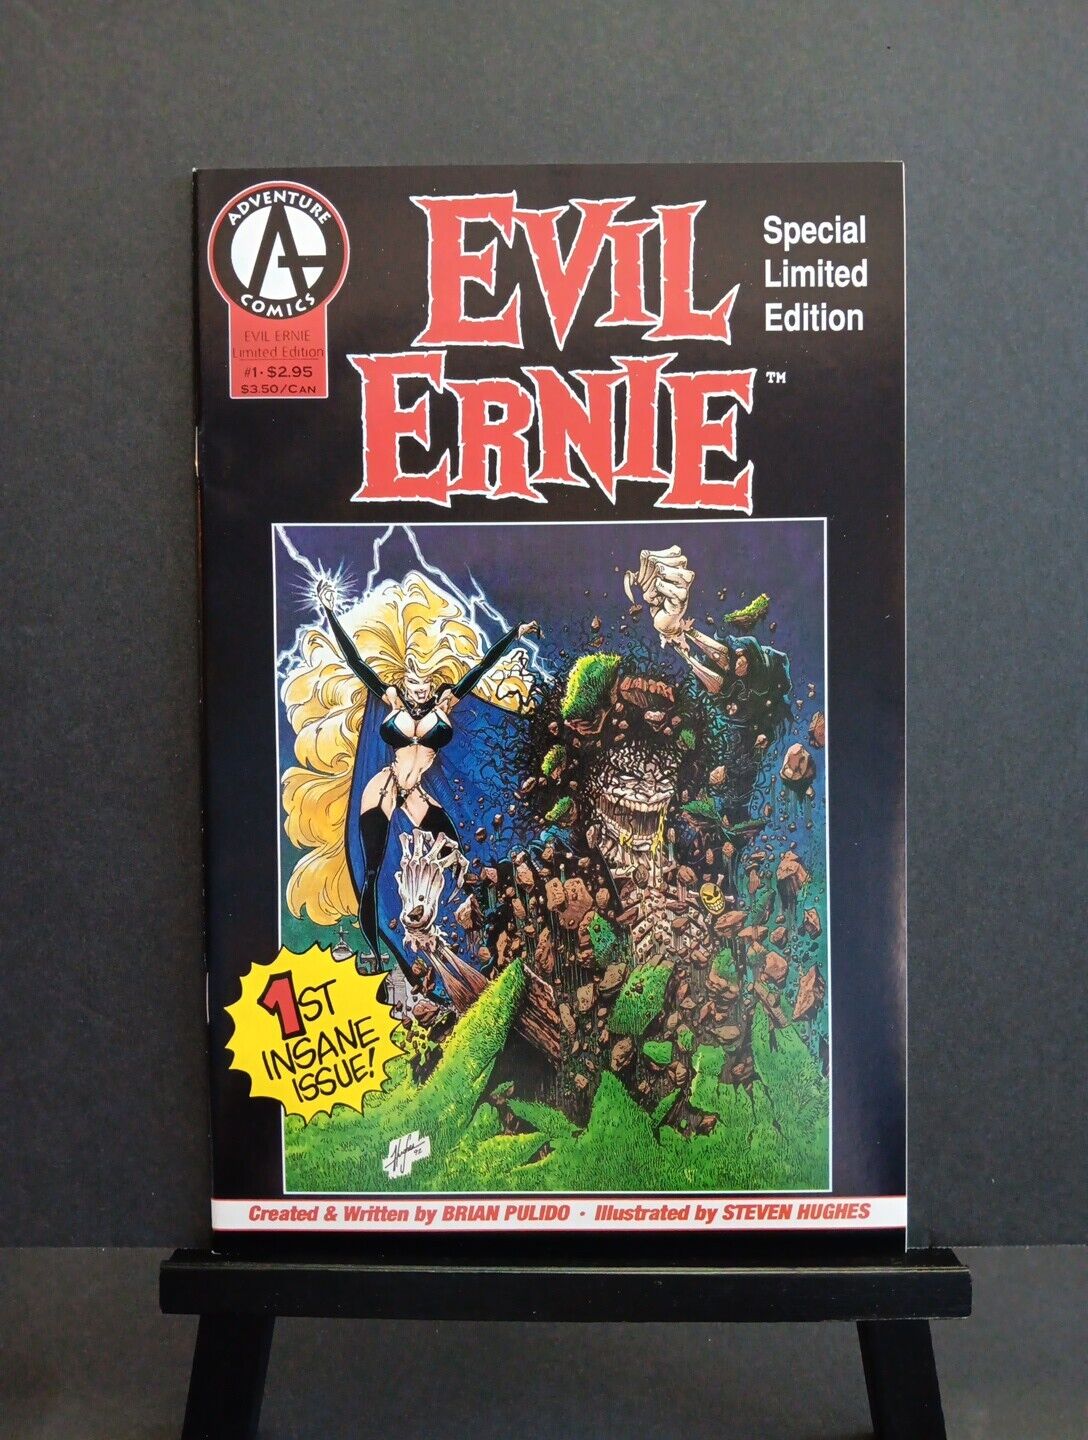 EVIL ERNIE #1 NM/NM+ 9.4-9.6 SPECIAL LIMITED EDITION - ADVENTURE COMICS (1992)